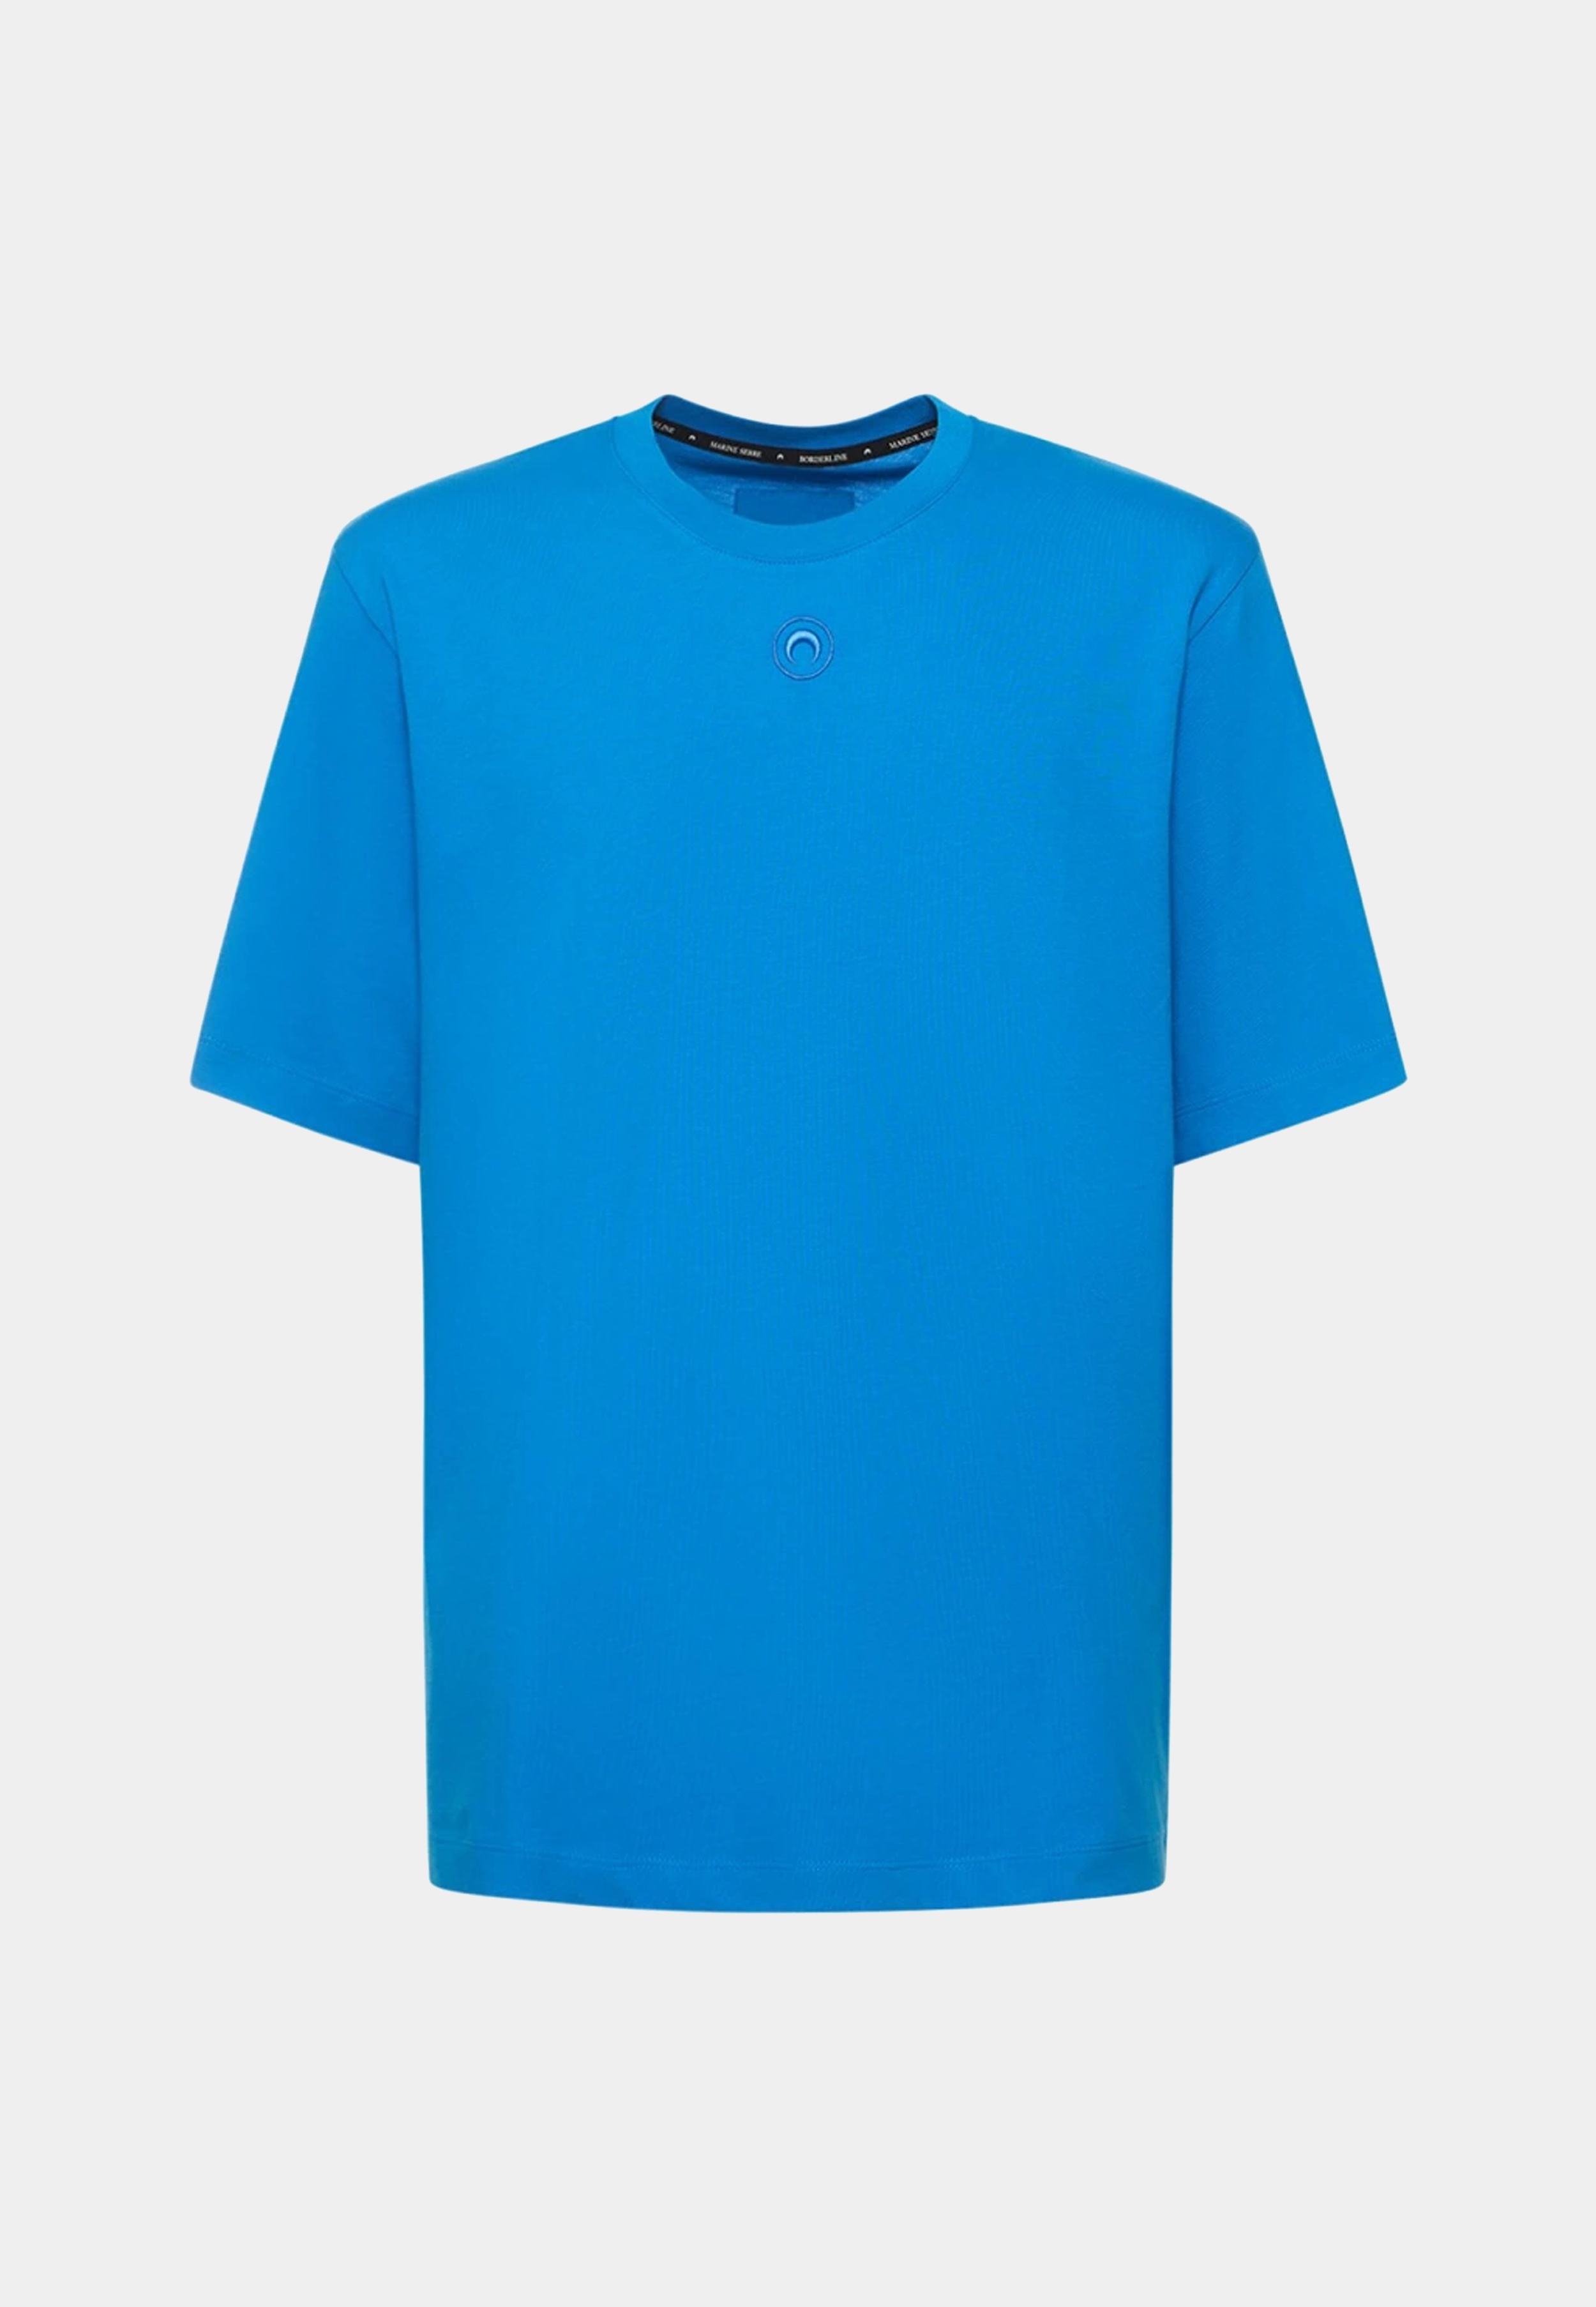 Marine Serre Organic Cotton Jersey Plain T-Shirt 1471-Bl50 Blue